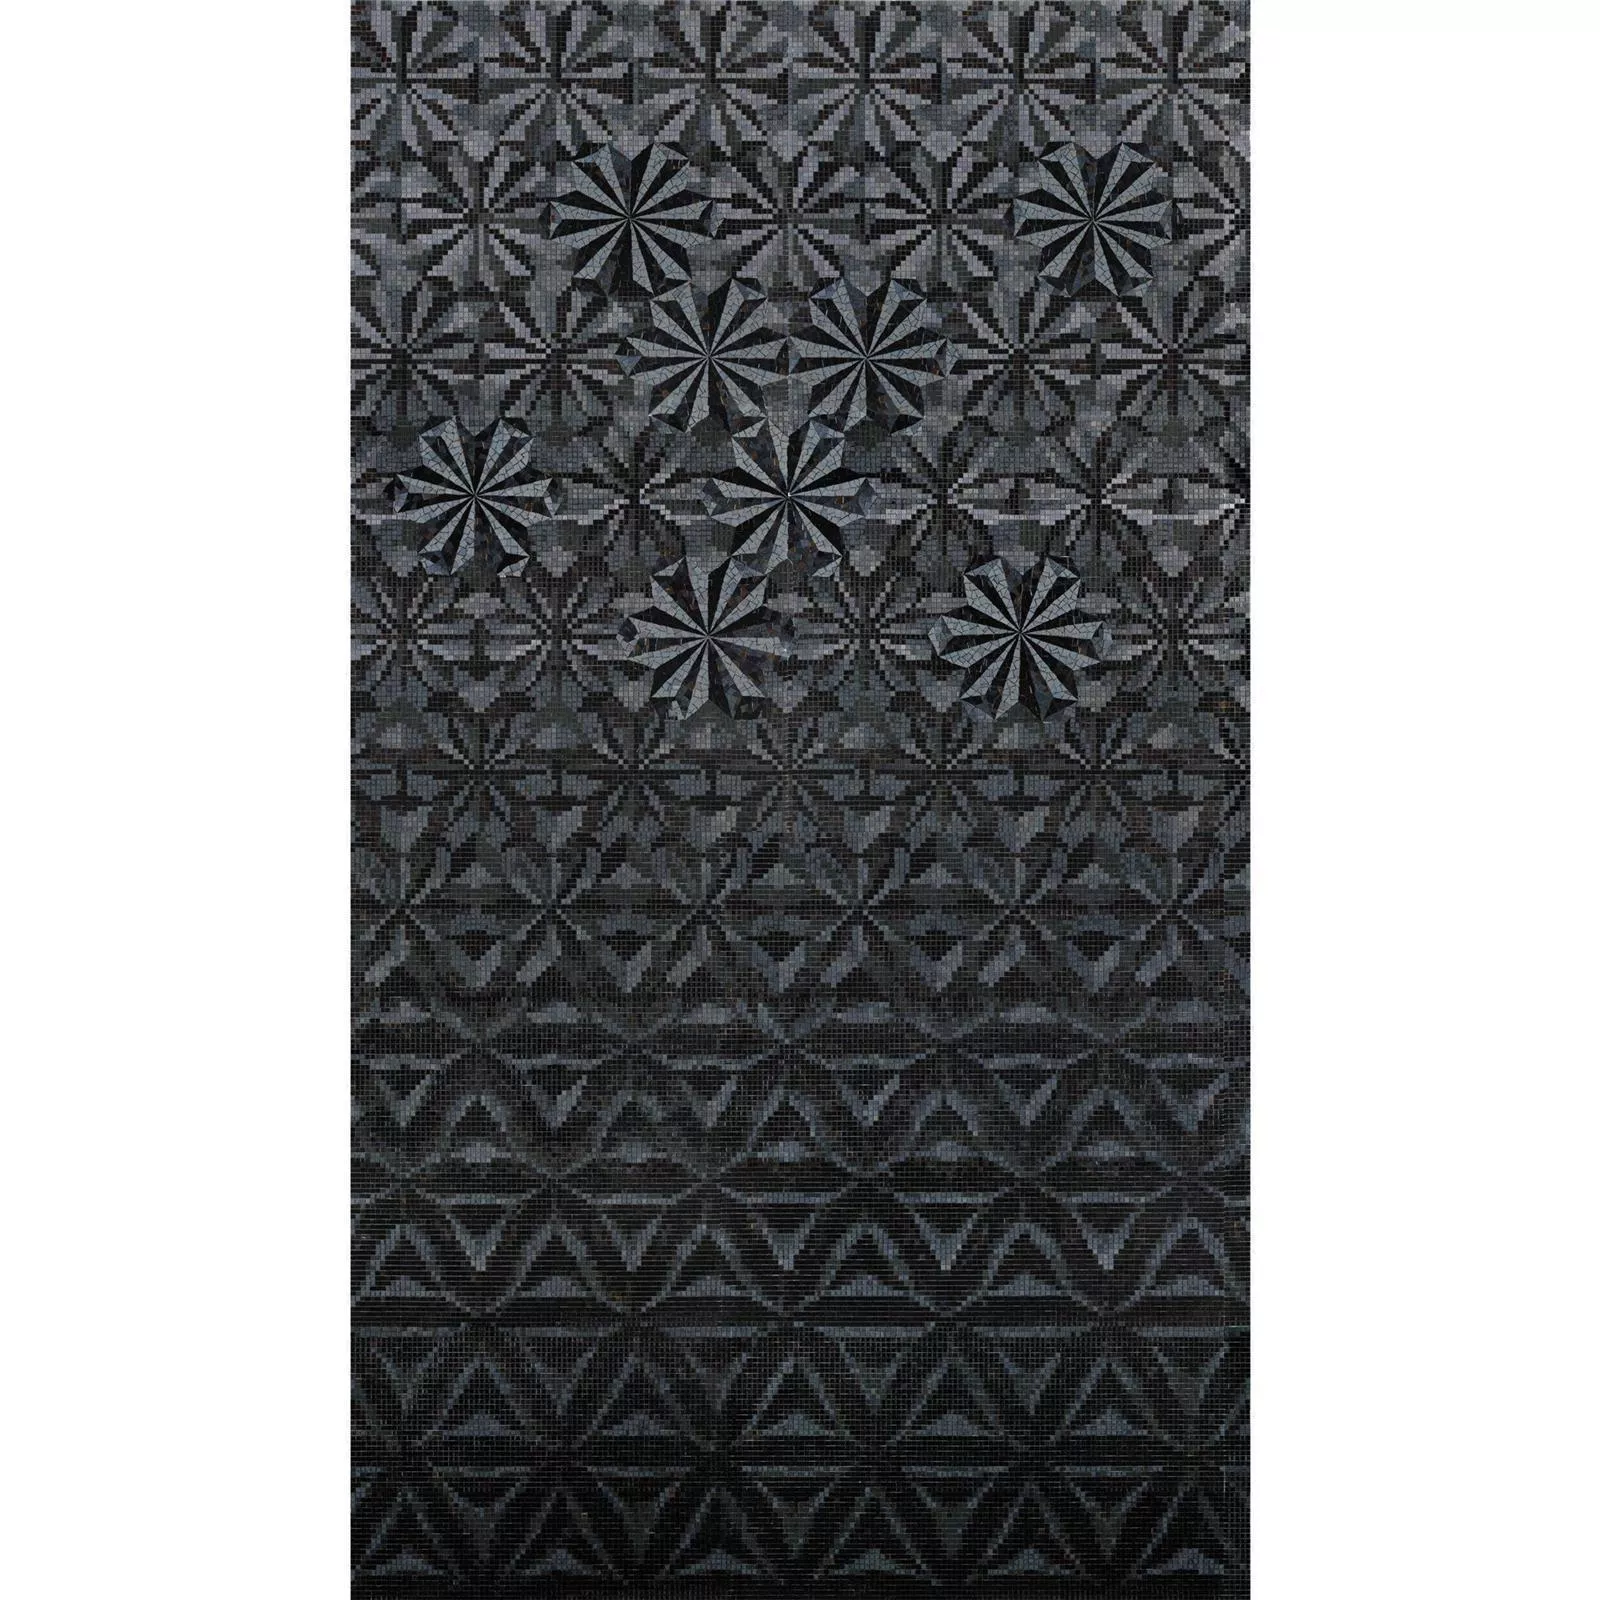 Skleněná Mozaika Obrázek Magicflower Black 110x240cm